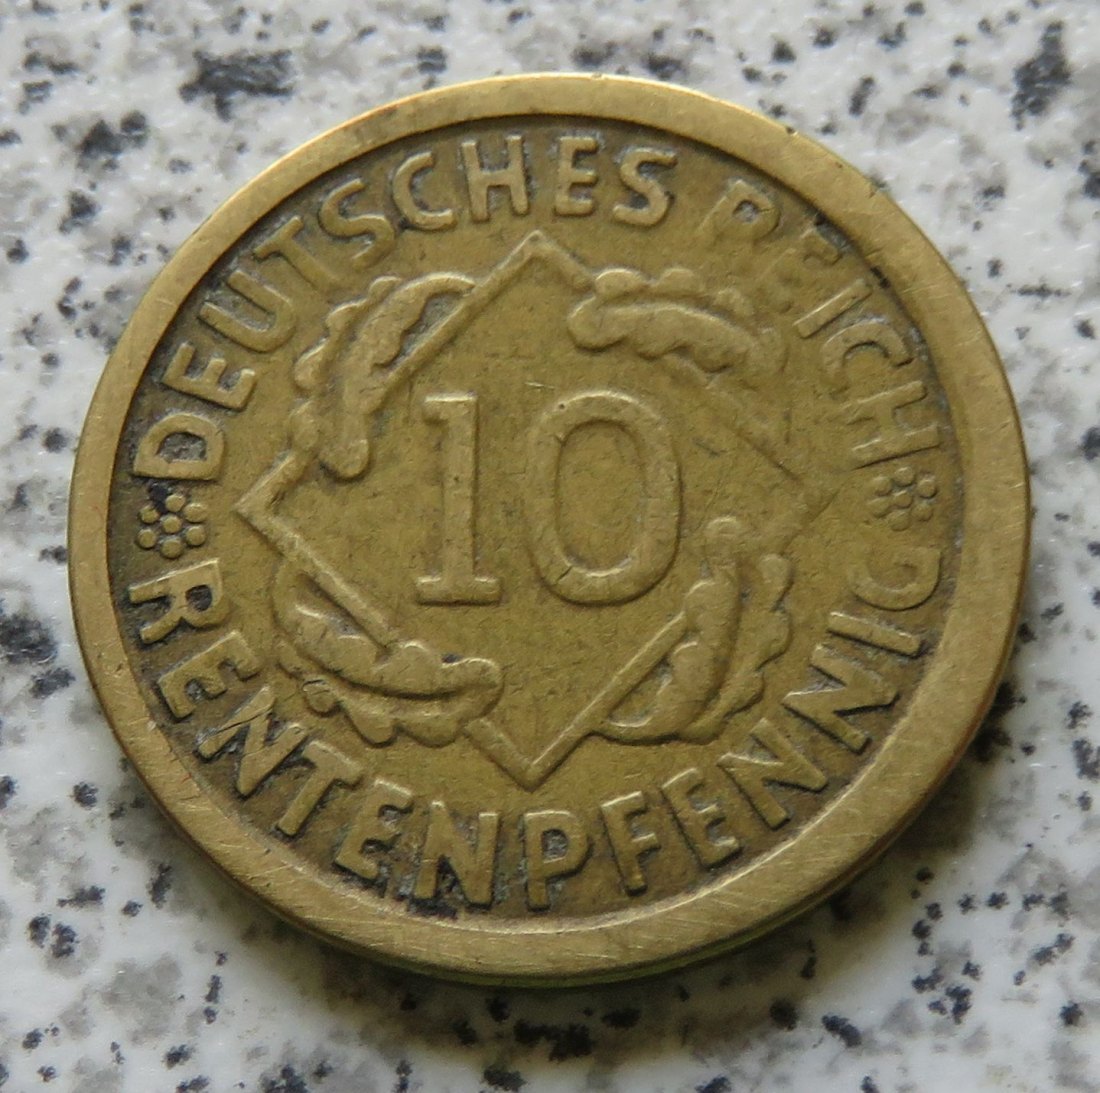  Weimarer Republik 10 Rentenpfennig 1924 E   